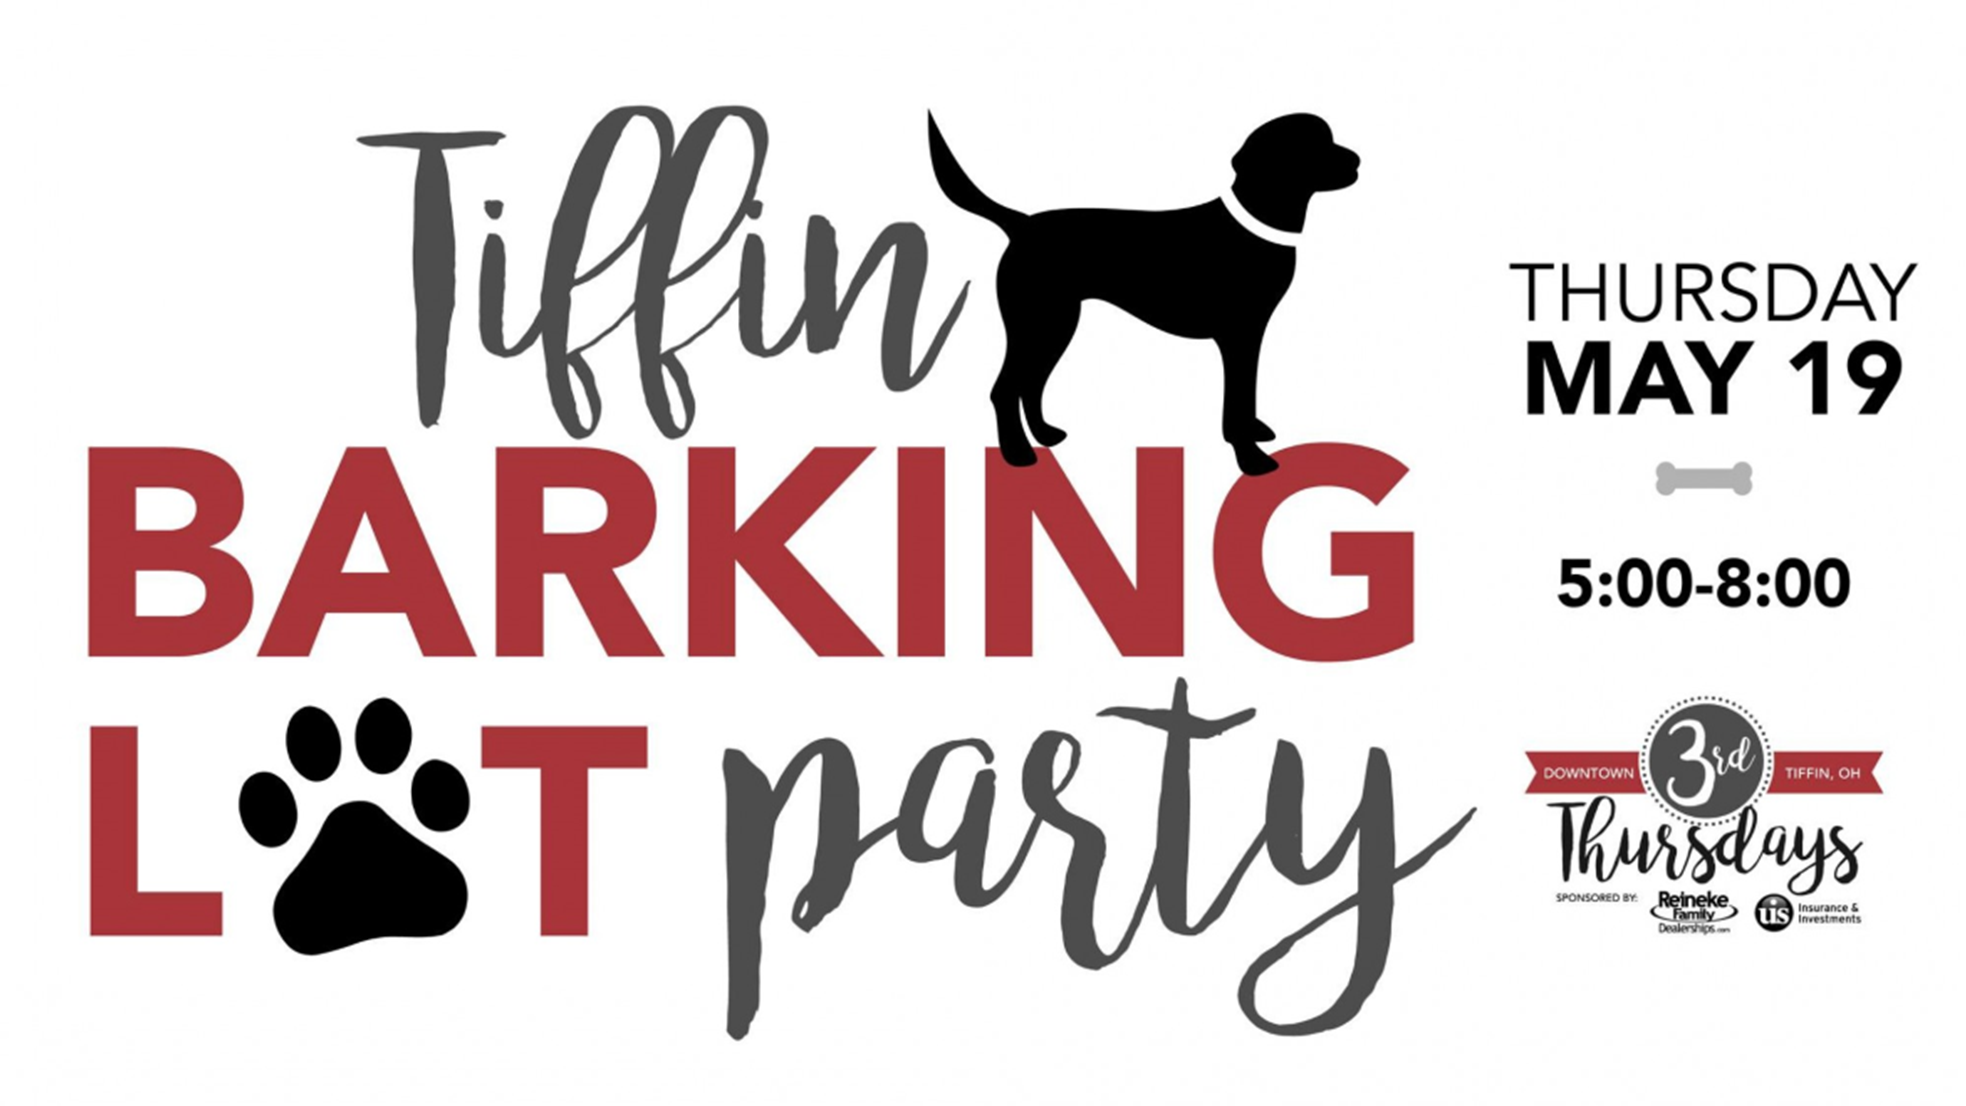 Third Thursday Tiffin Barking Lot Party